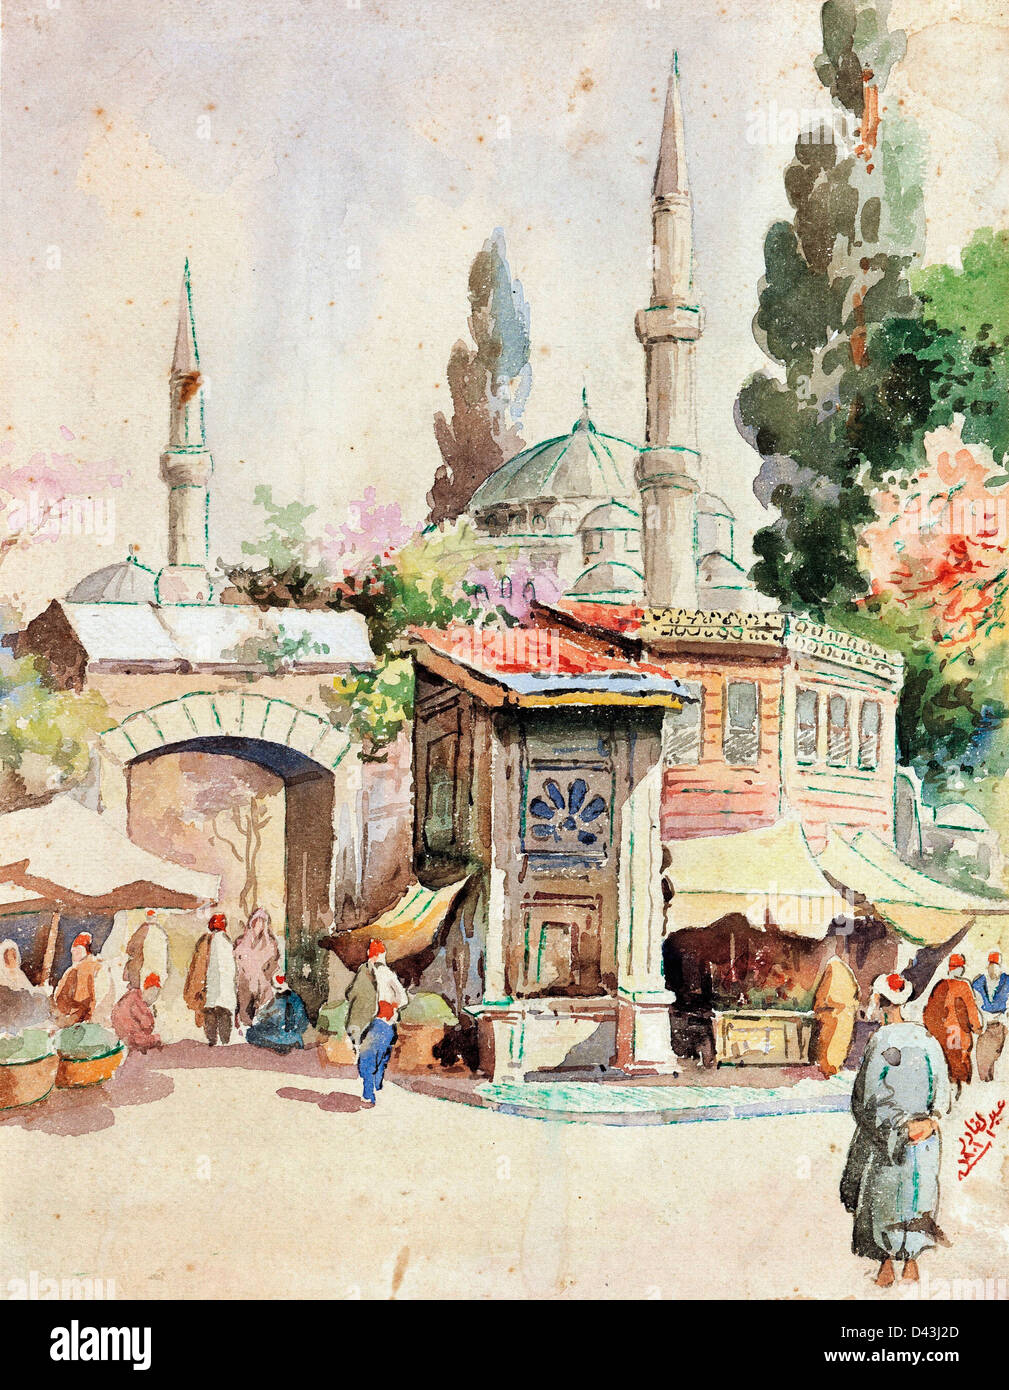 Abdul Qadir al-Rassam, Title Unknown 1901 Watercolor on paper. Mathaf: Arab Museum of Modern Art, Doha, Qatar Stock Photo